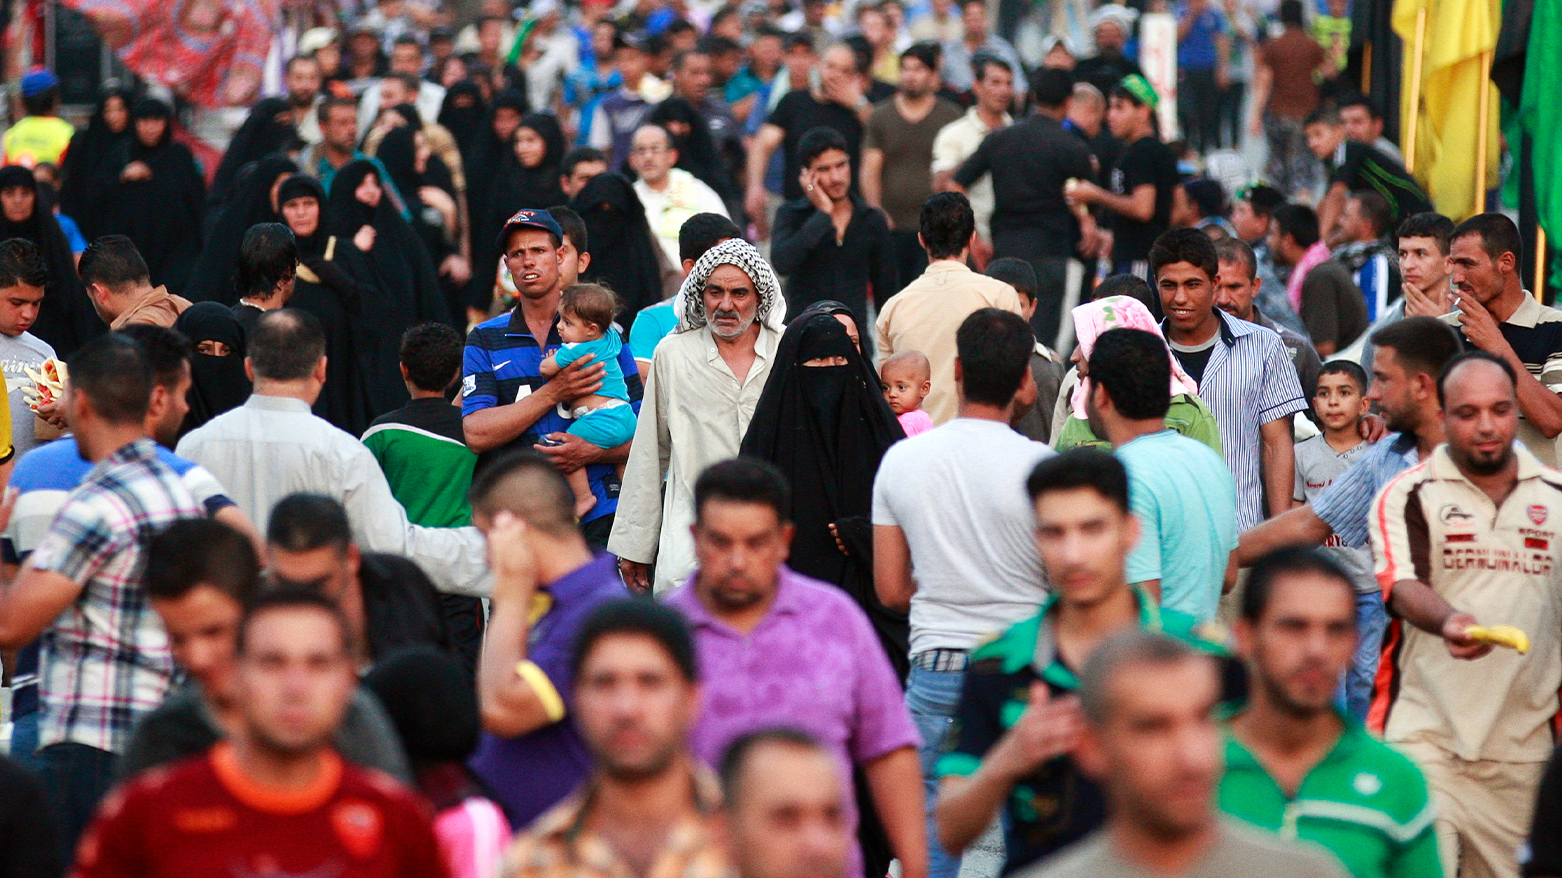 The district of Kazimiyah, in Baghdad, Iraq, Thursday, June 14, 2012. (AP Photo/Hadi Mizban)